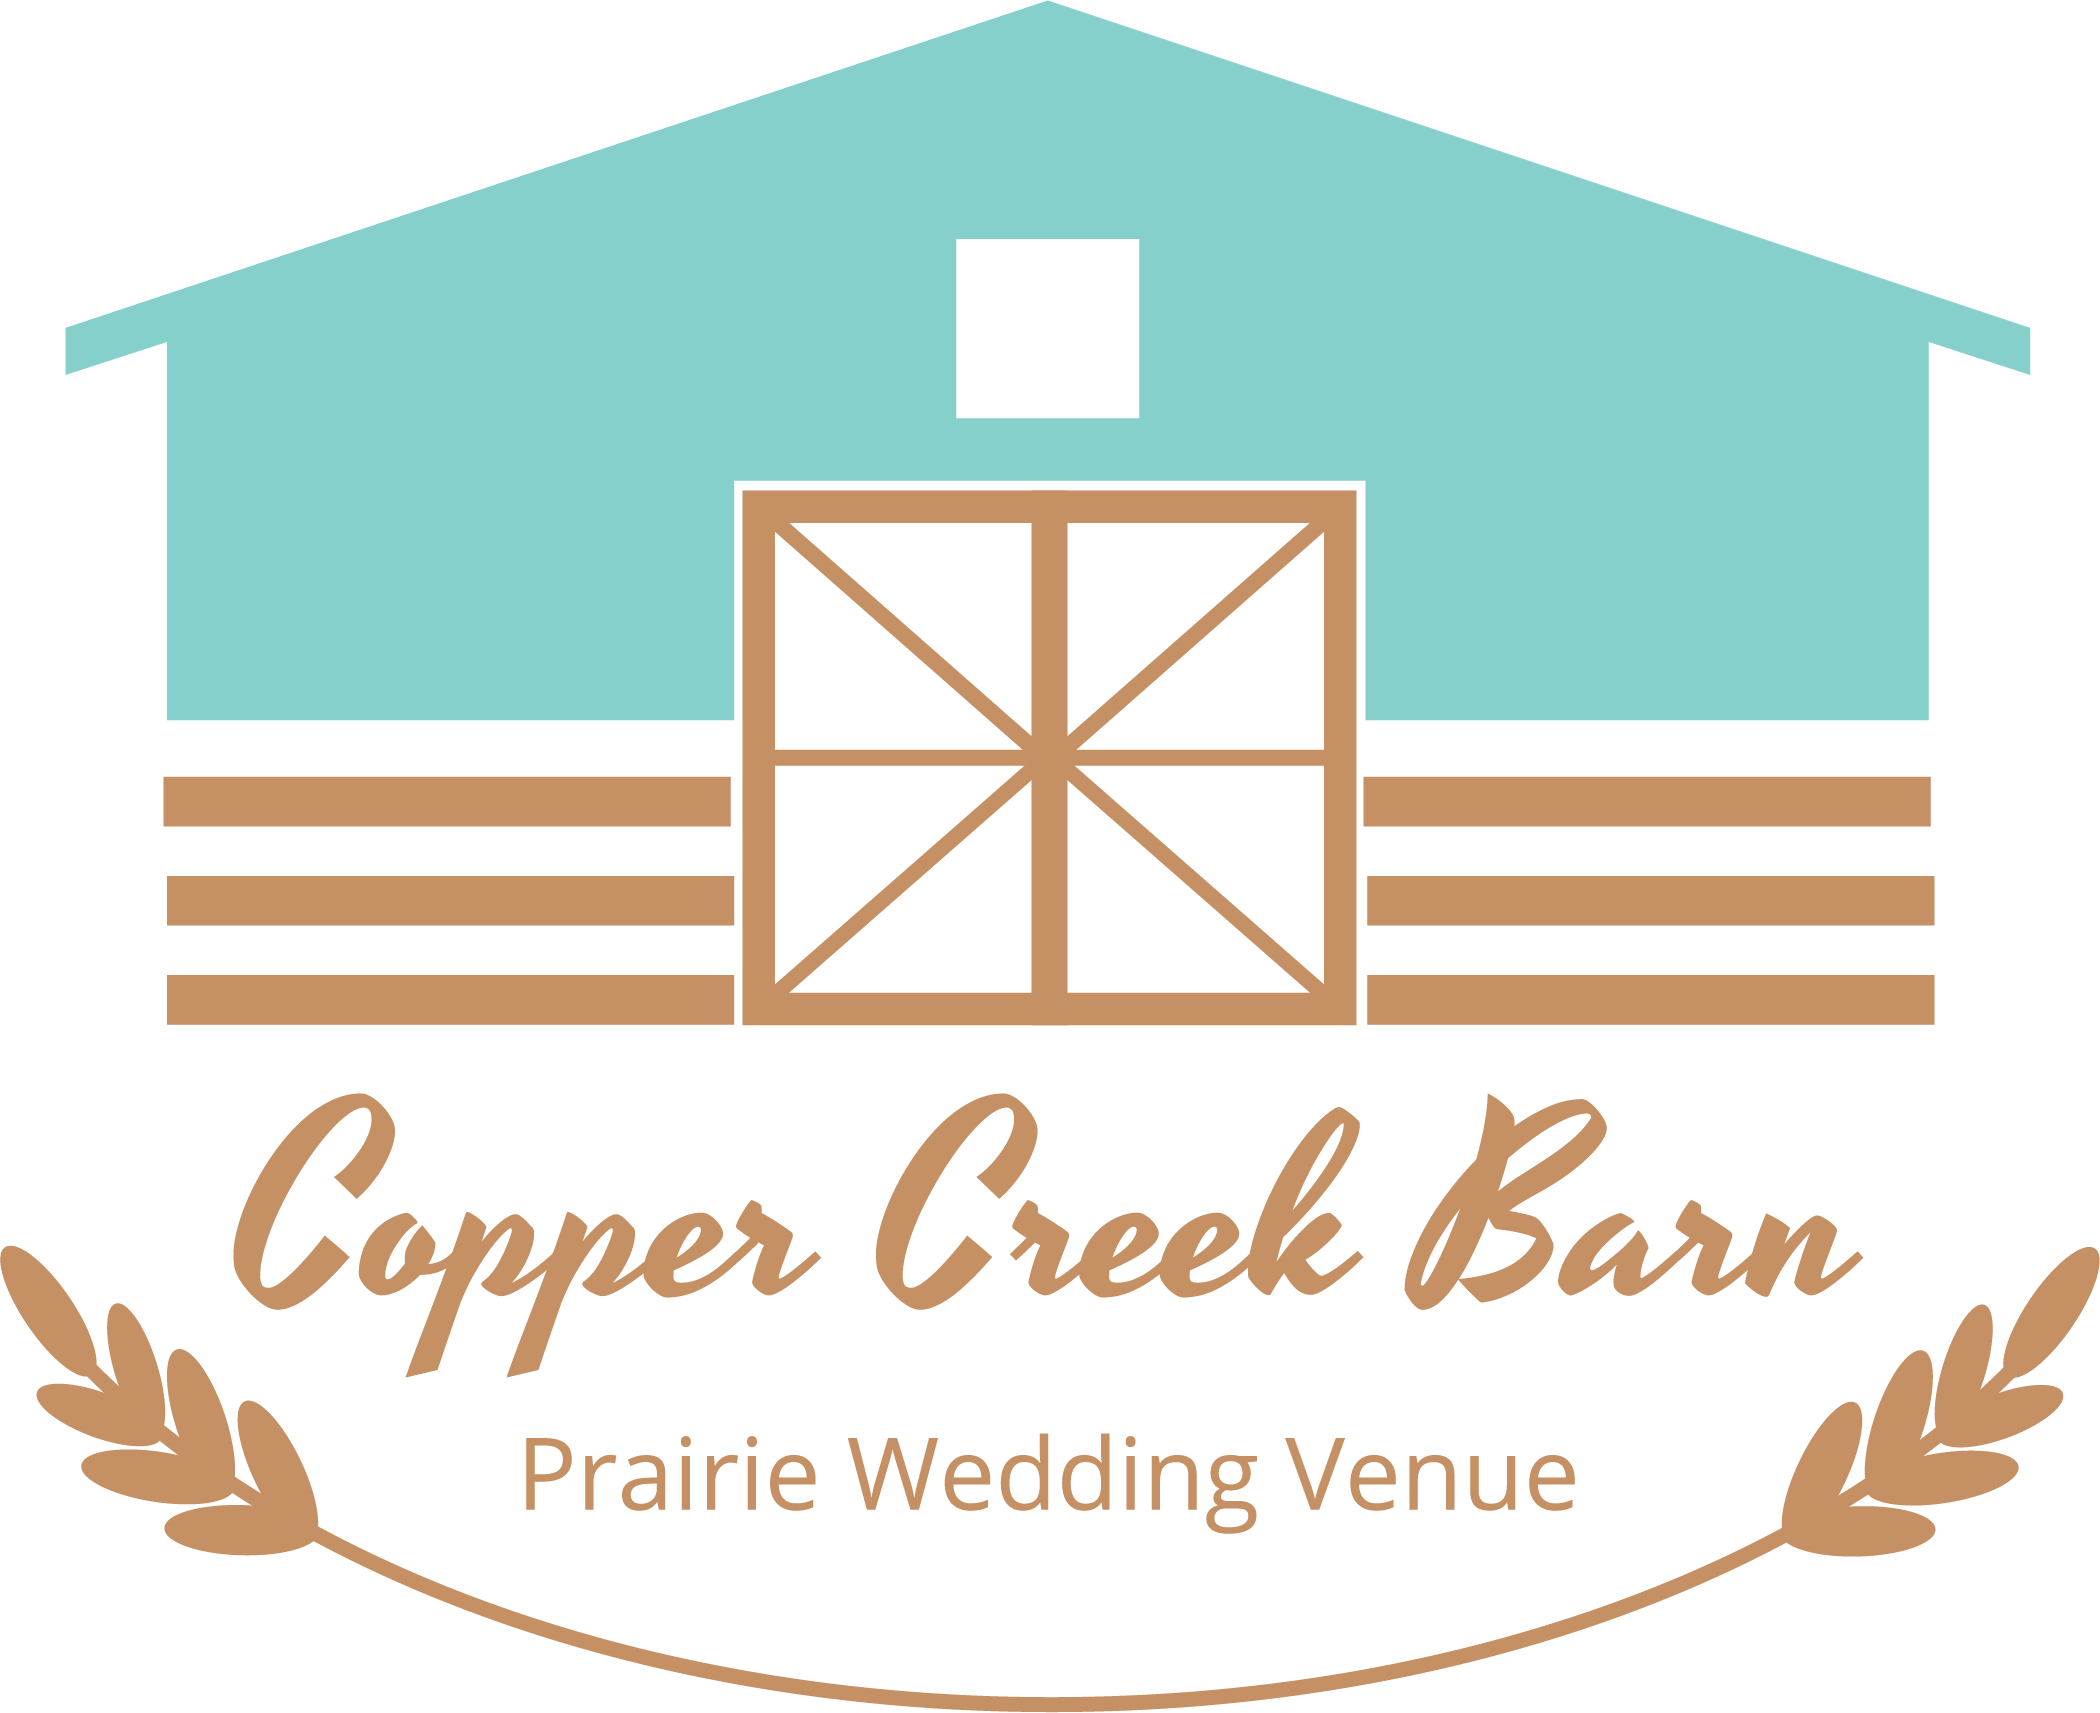 Copper Creek Barn